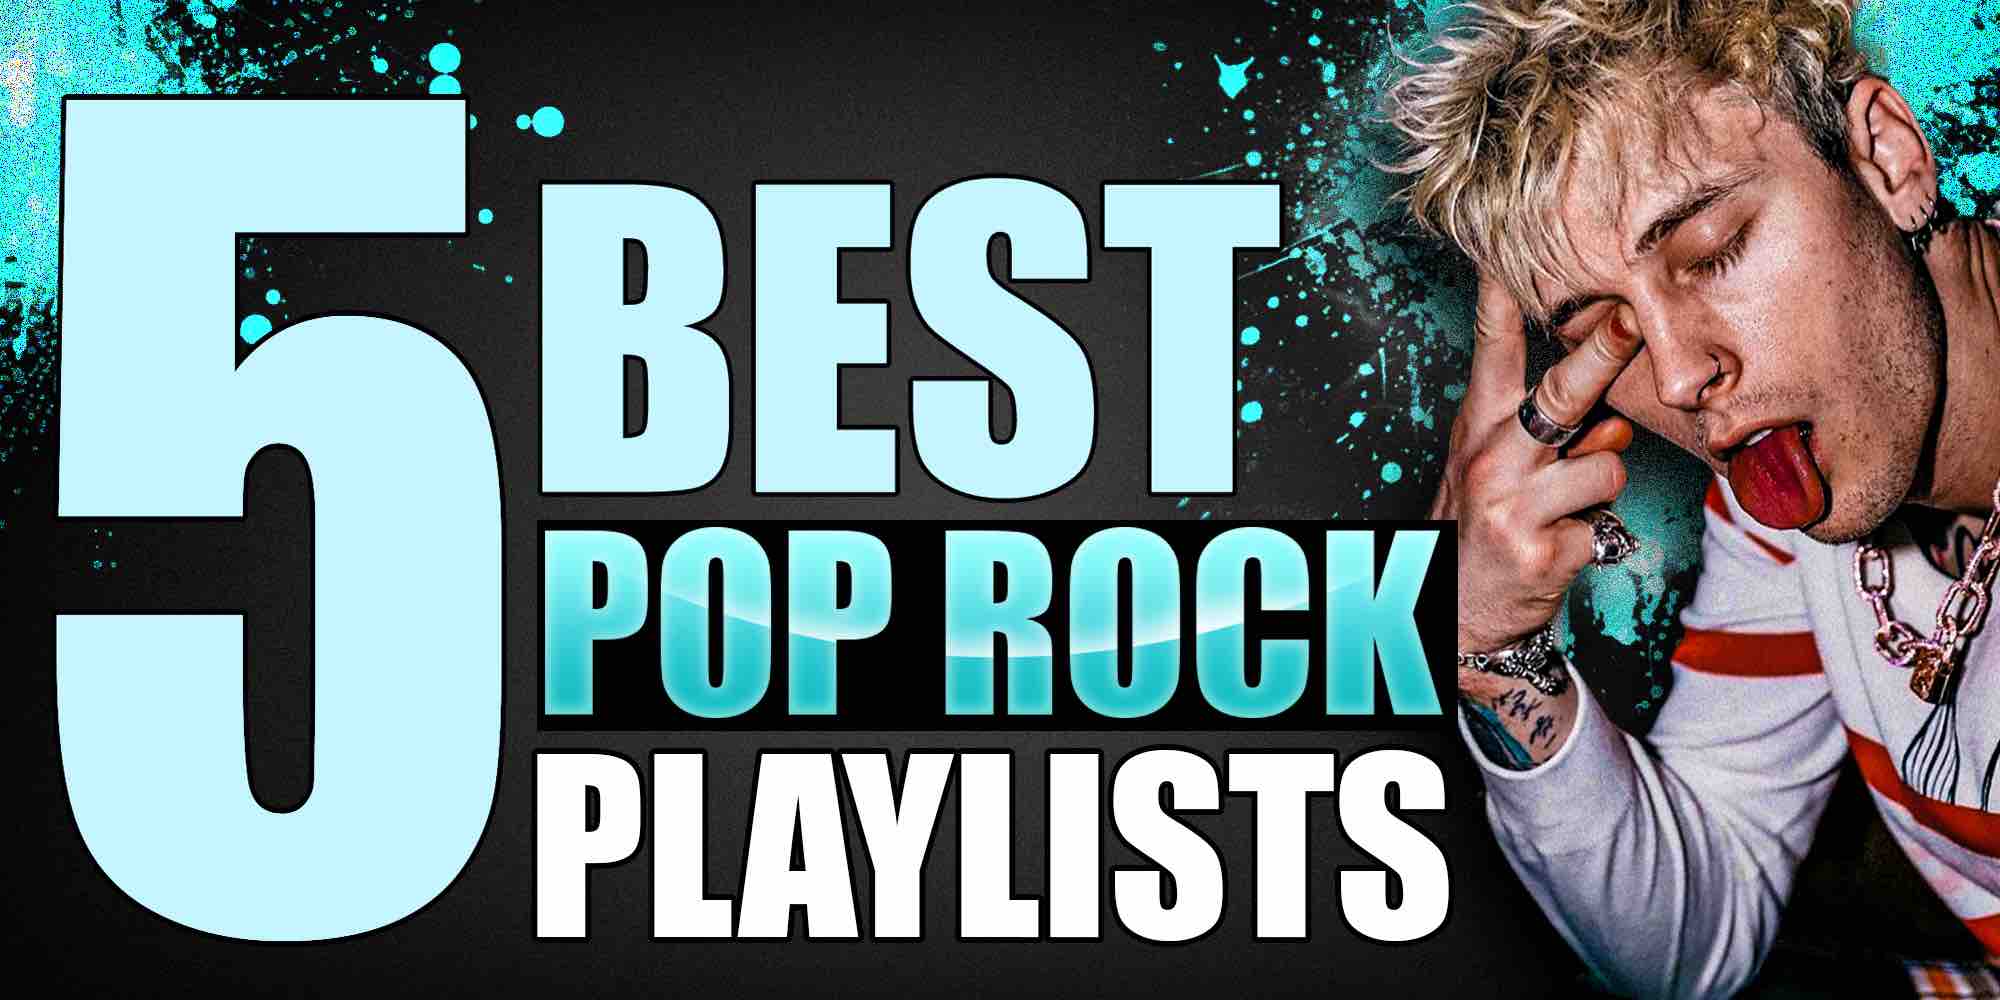 5 best pop rock playlists